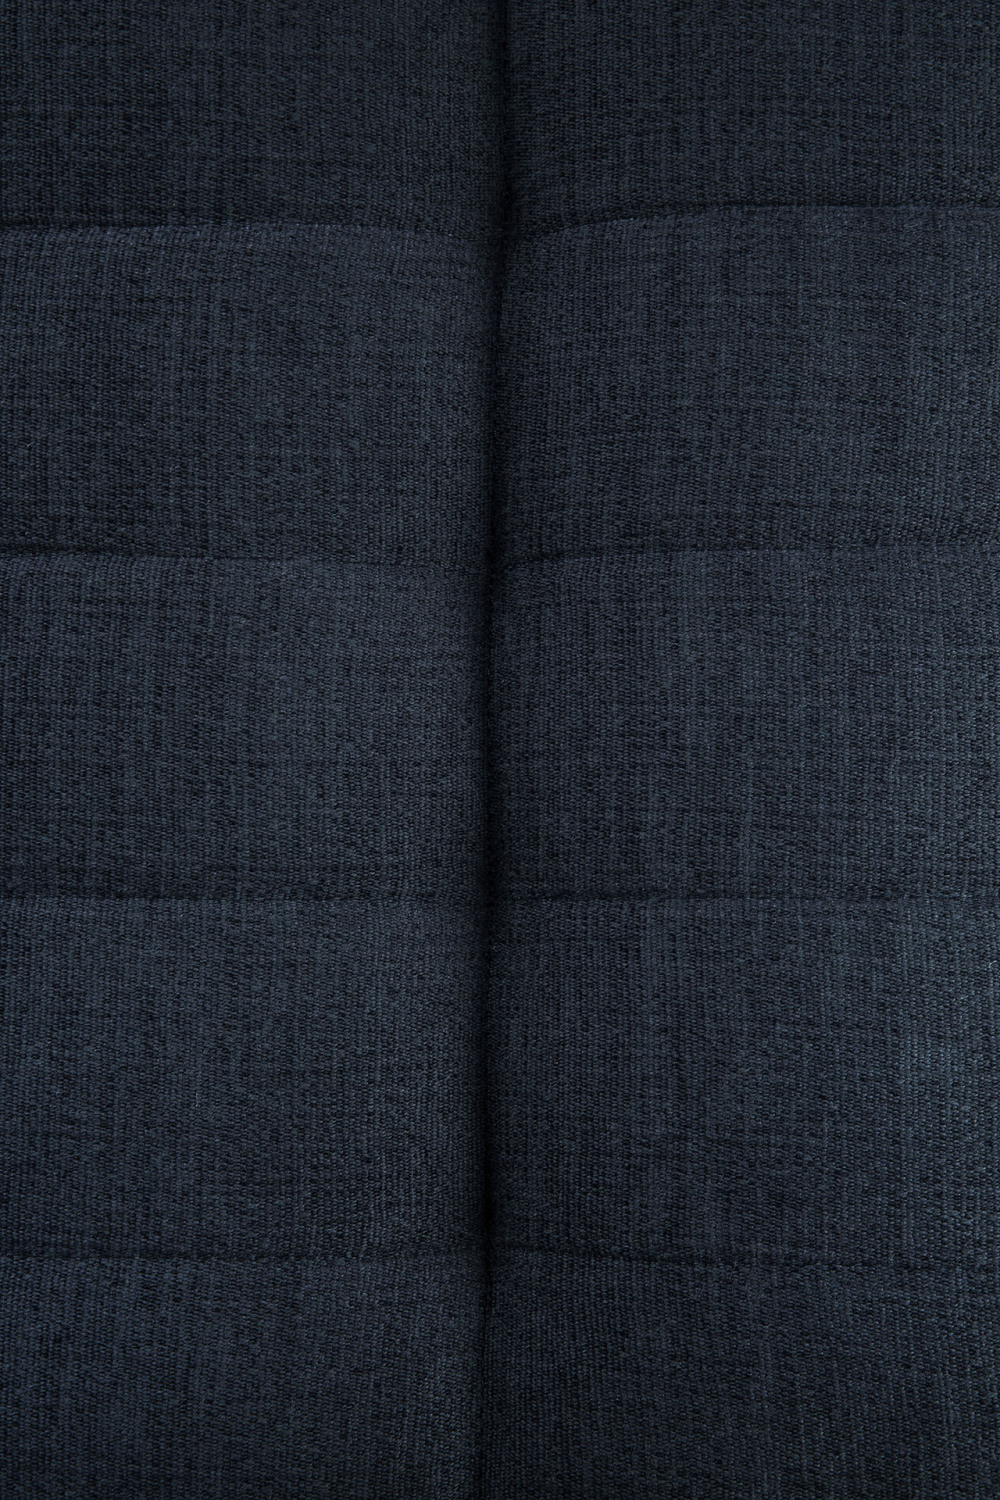 Blue Fabric Upholstered Sofa | Ethnicraft N701 | Oroa.com